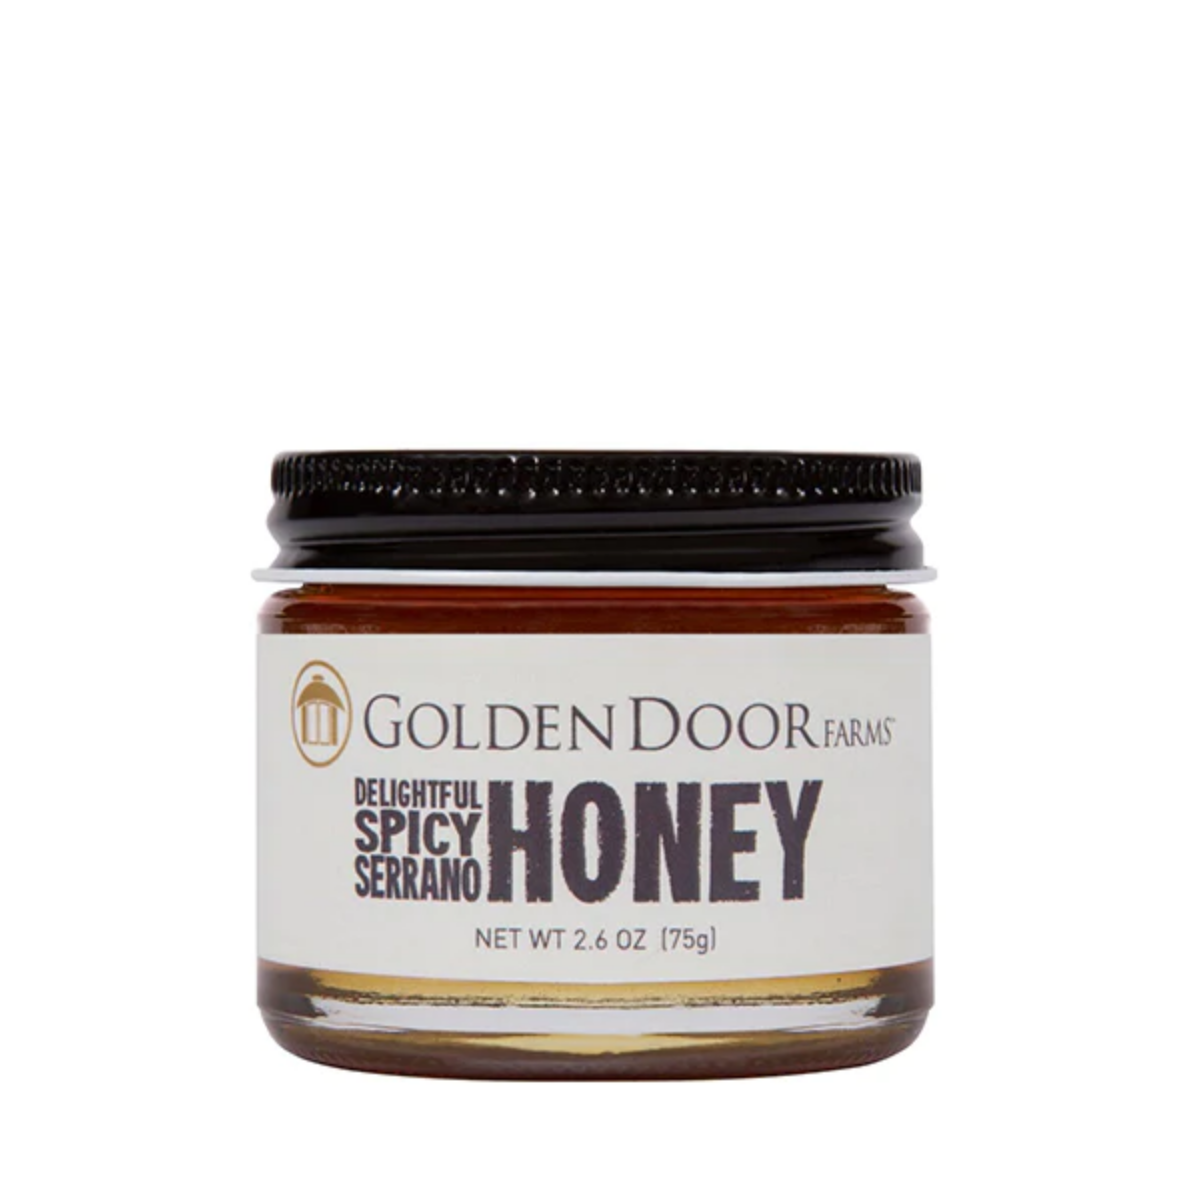 Delightful Spicy Serrano Honey